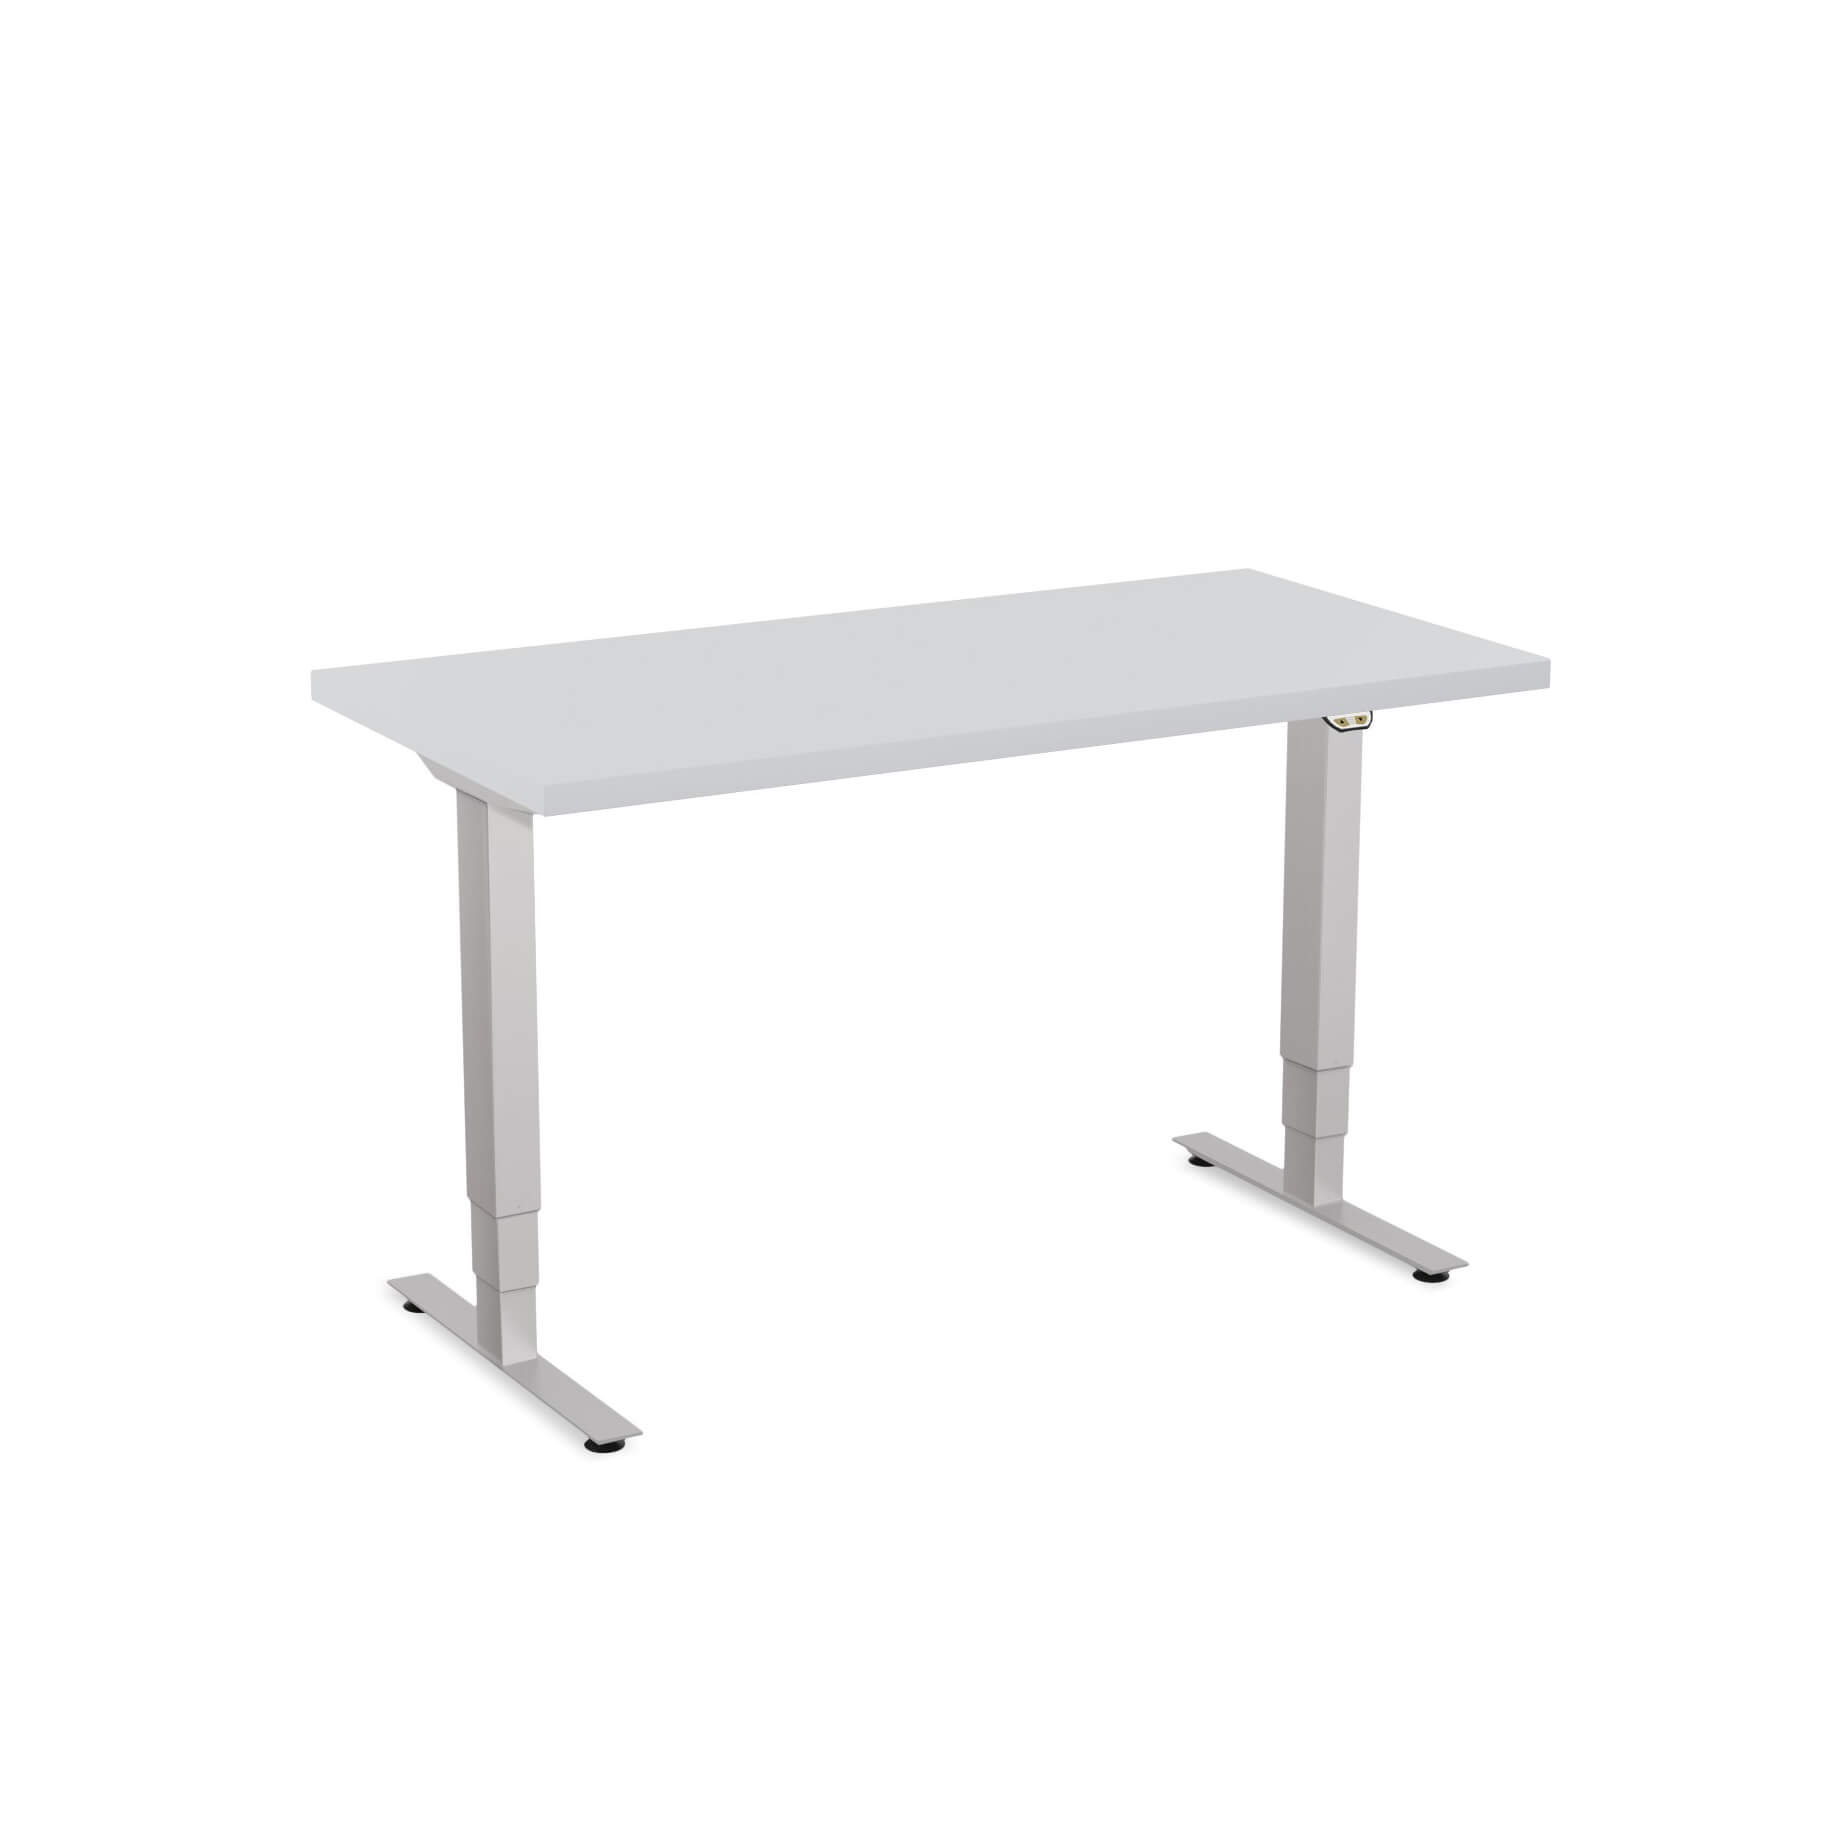 sit-stand-desk-height-adjustable-table-1.jpg